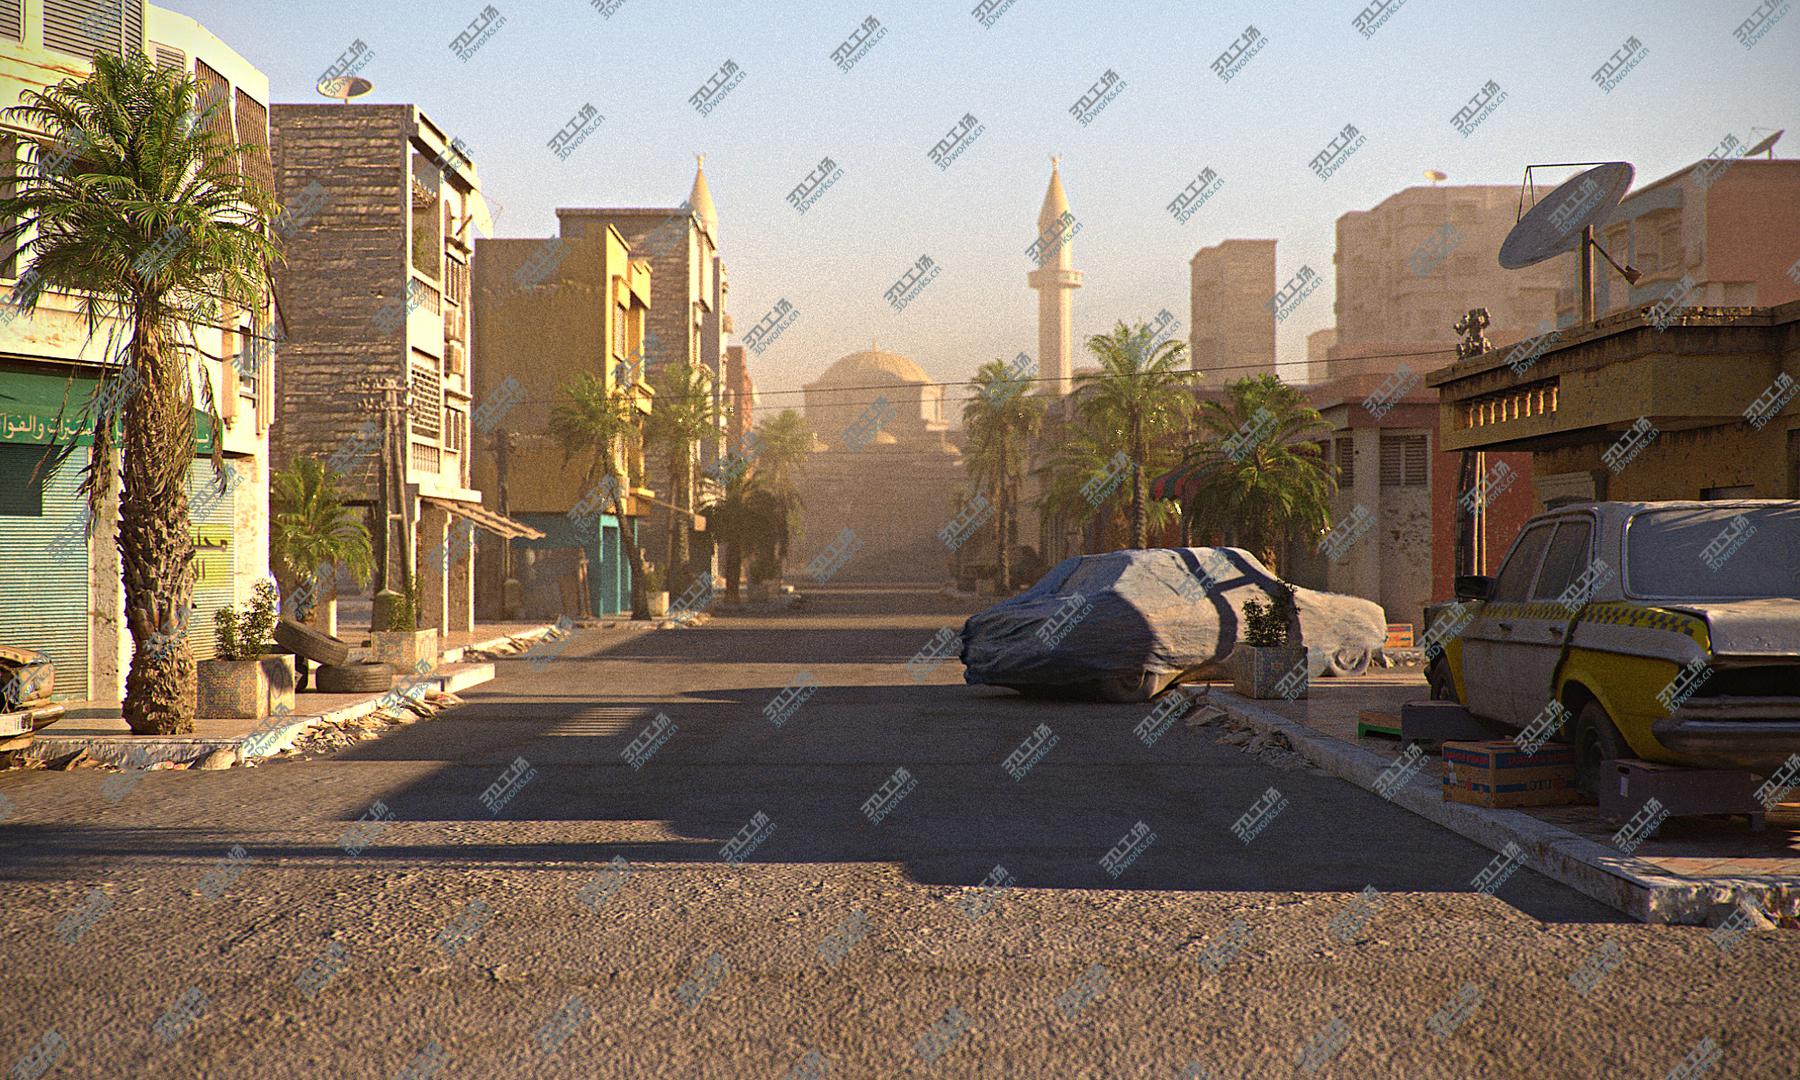 images/goods_img/202104092/Arab City Animated HD 3D model/1.jpg